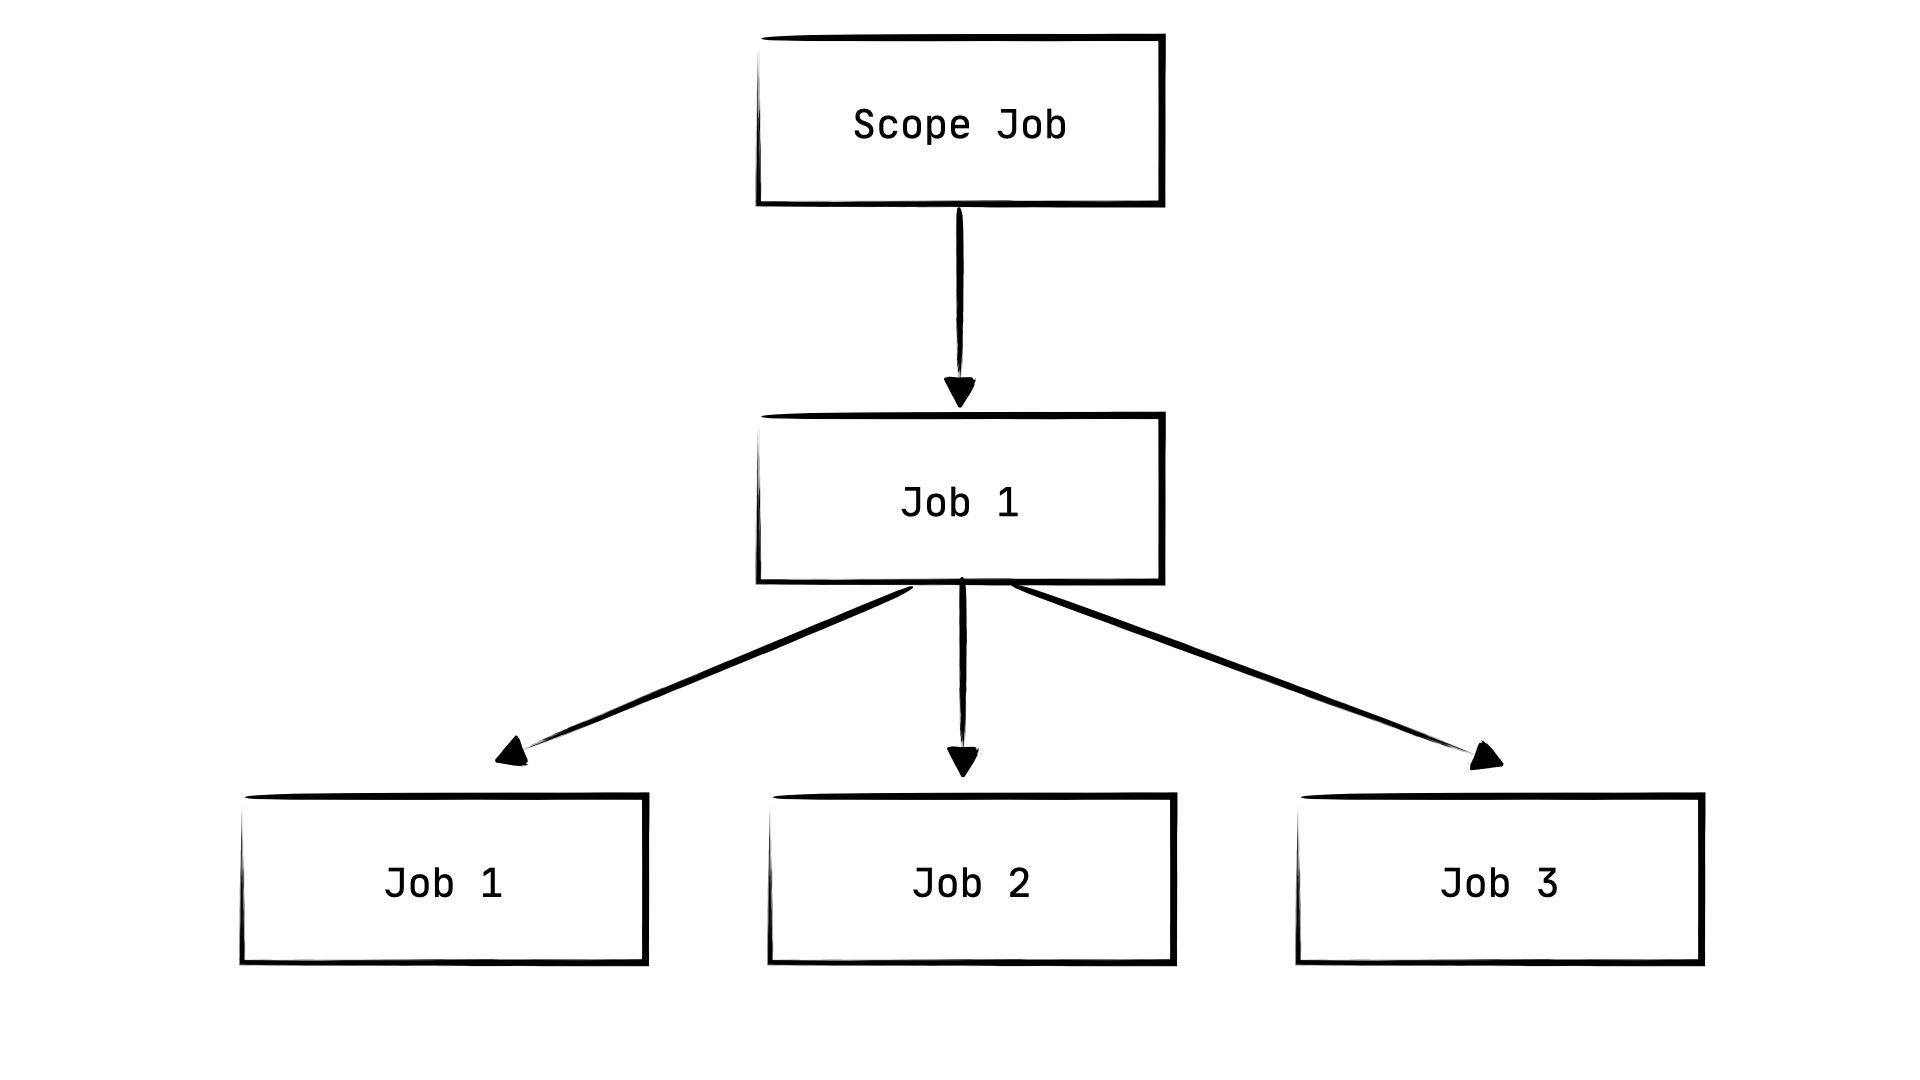 coroutines-job-structures-image-2